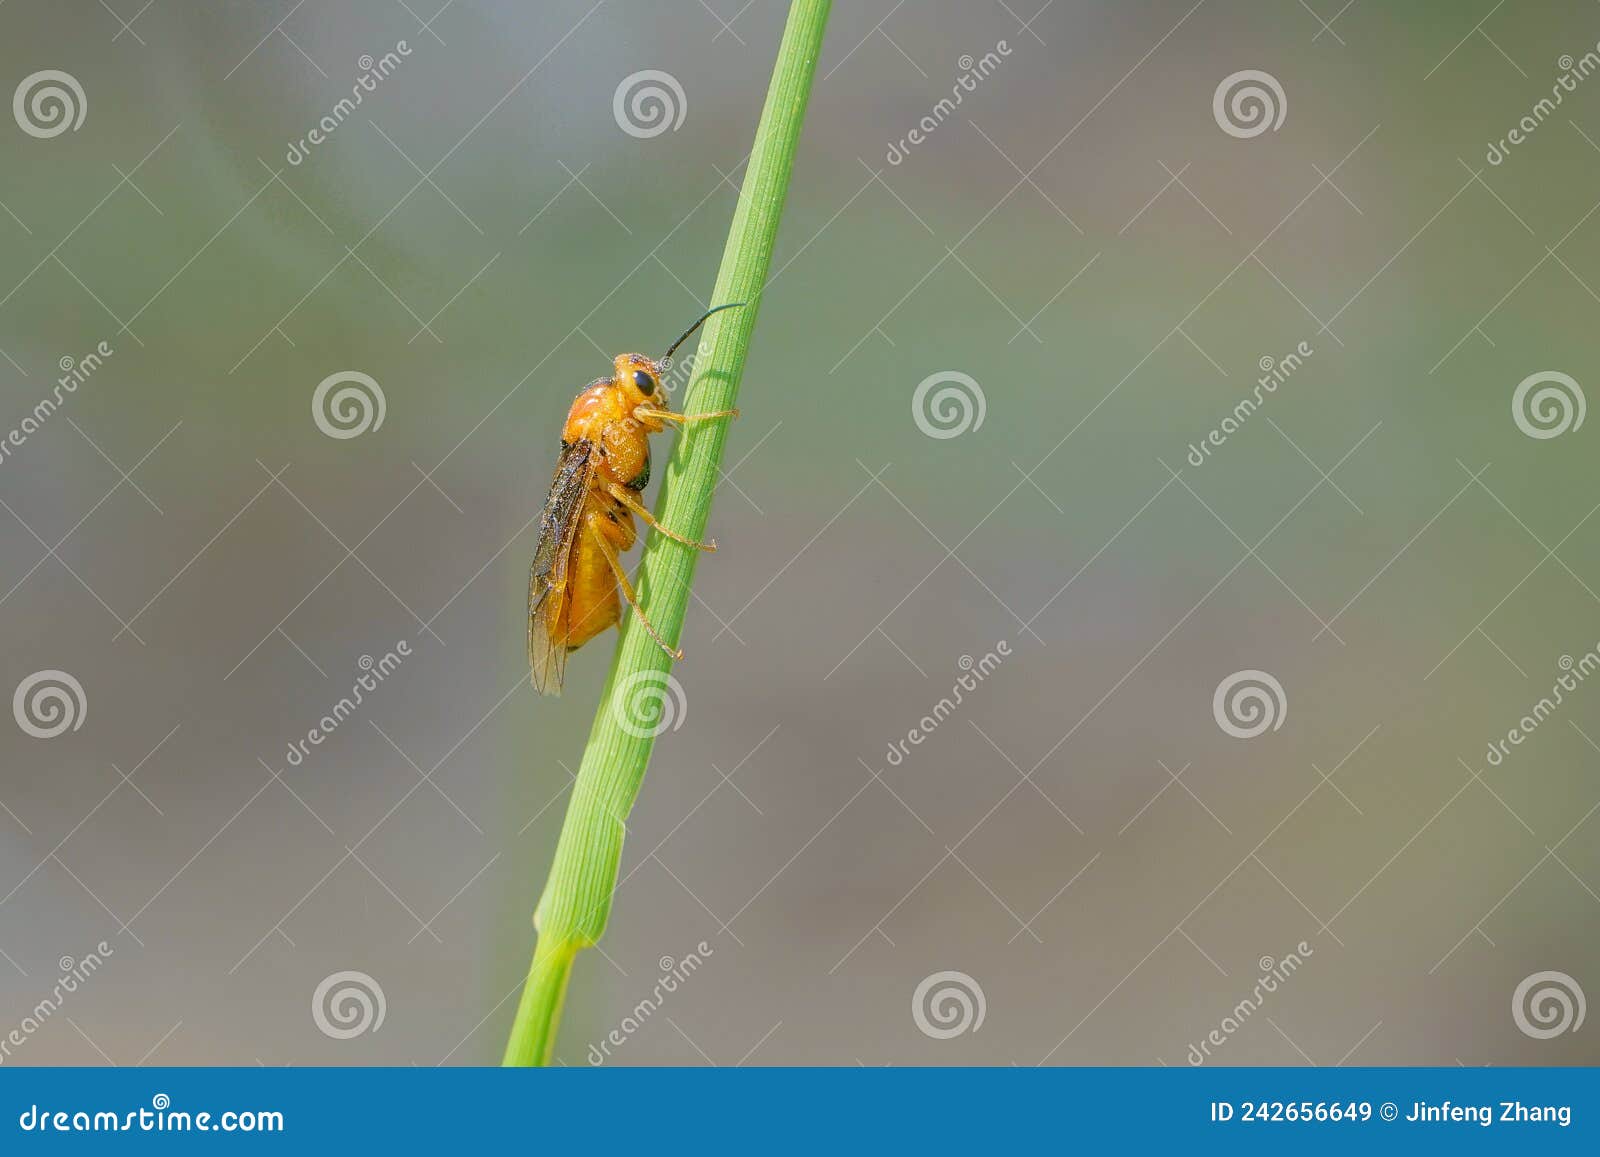 orange hymenoptera insect